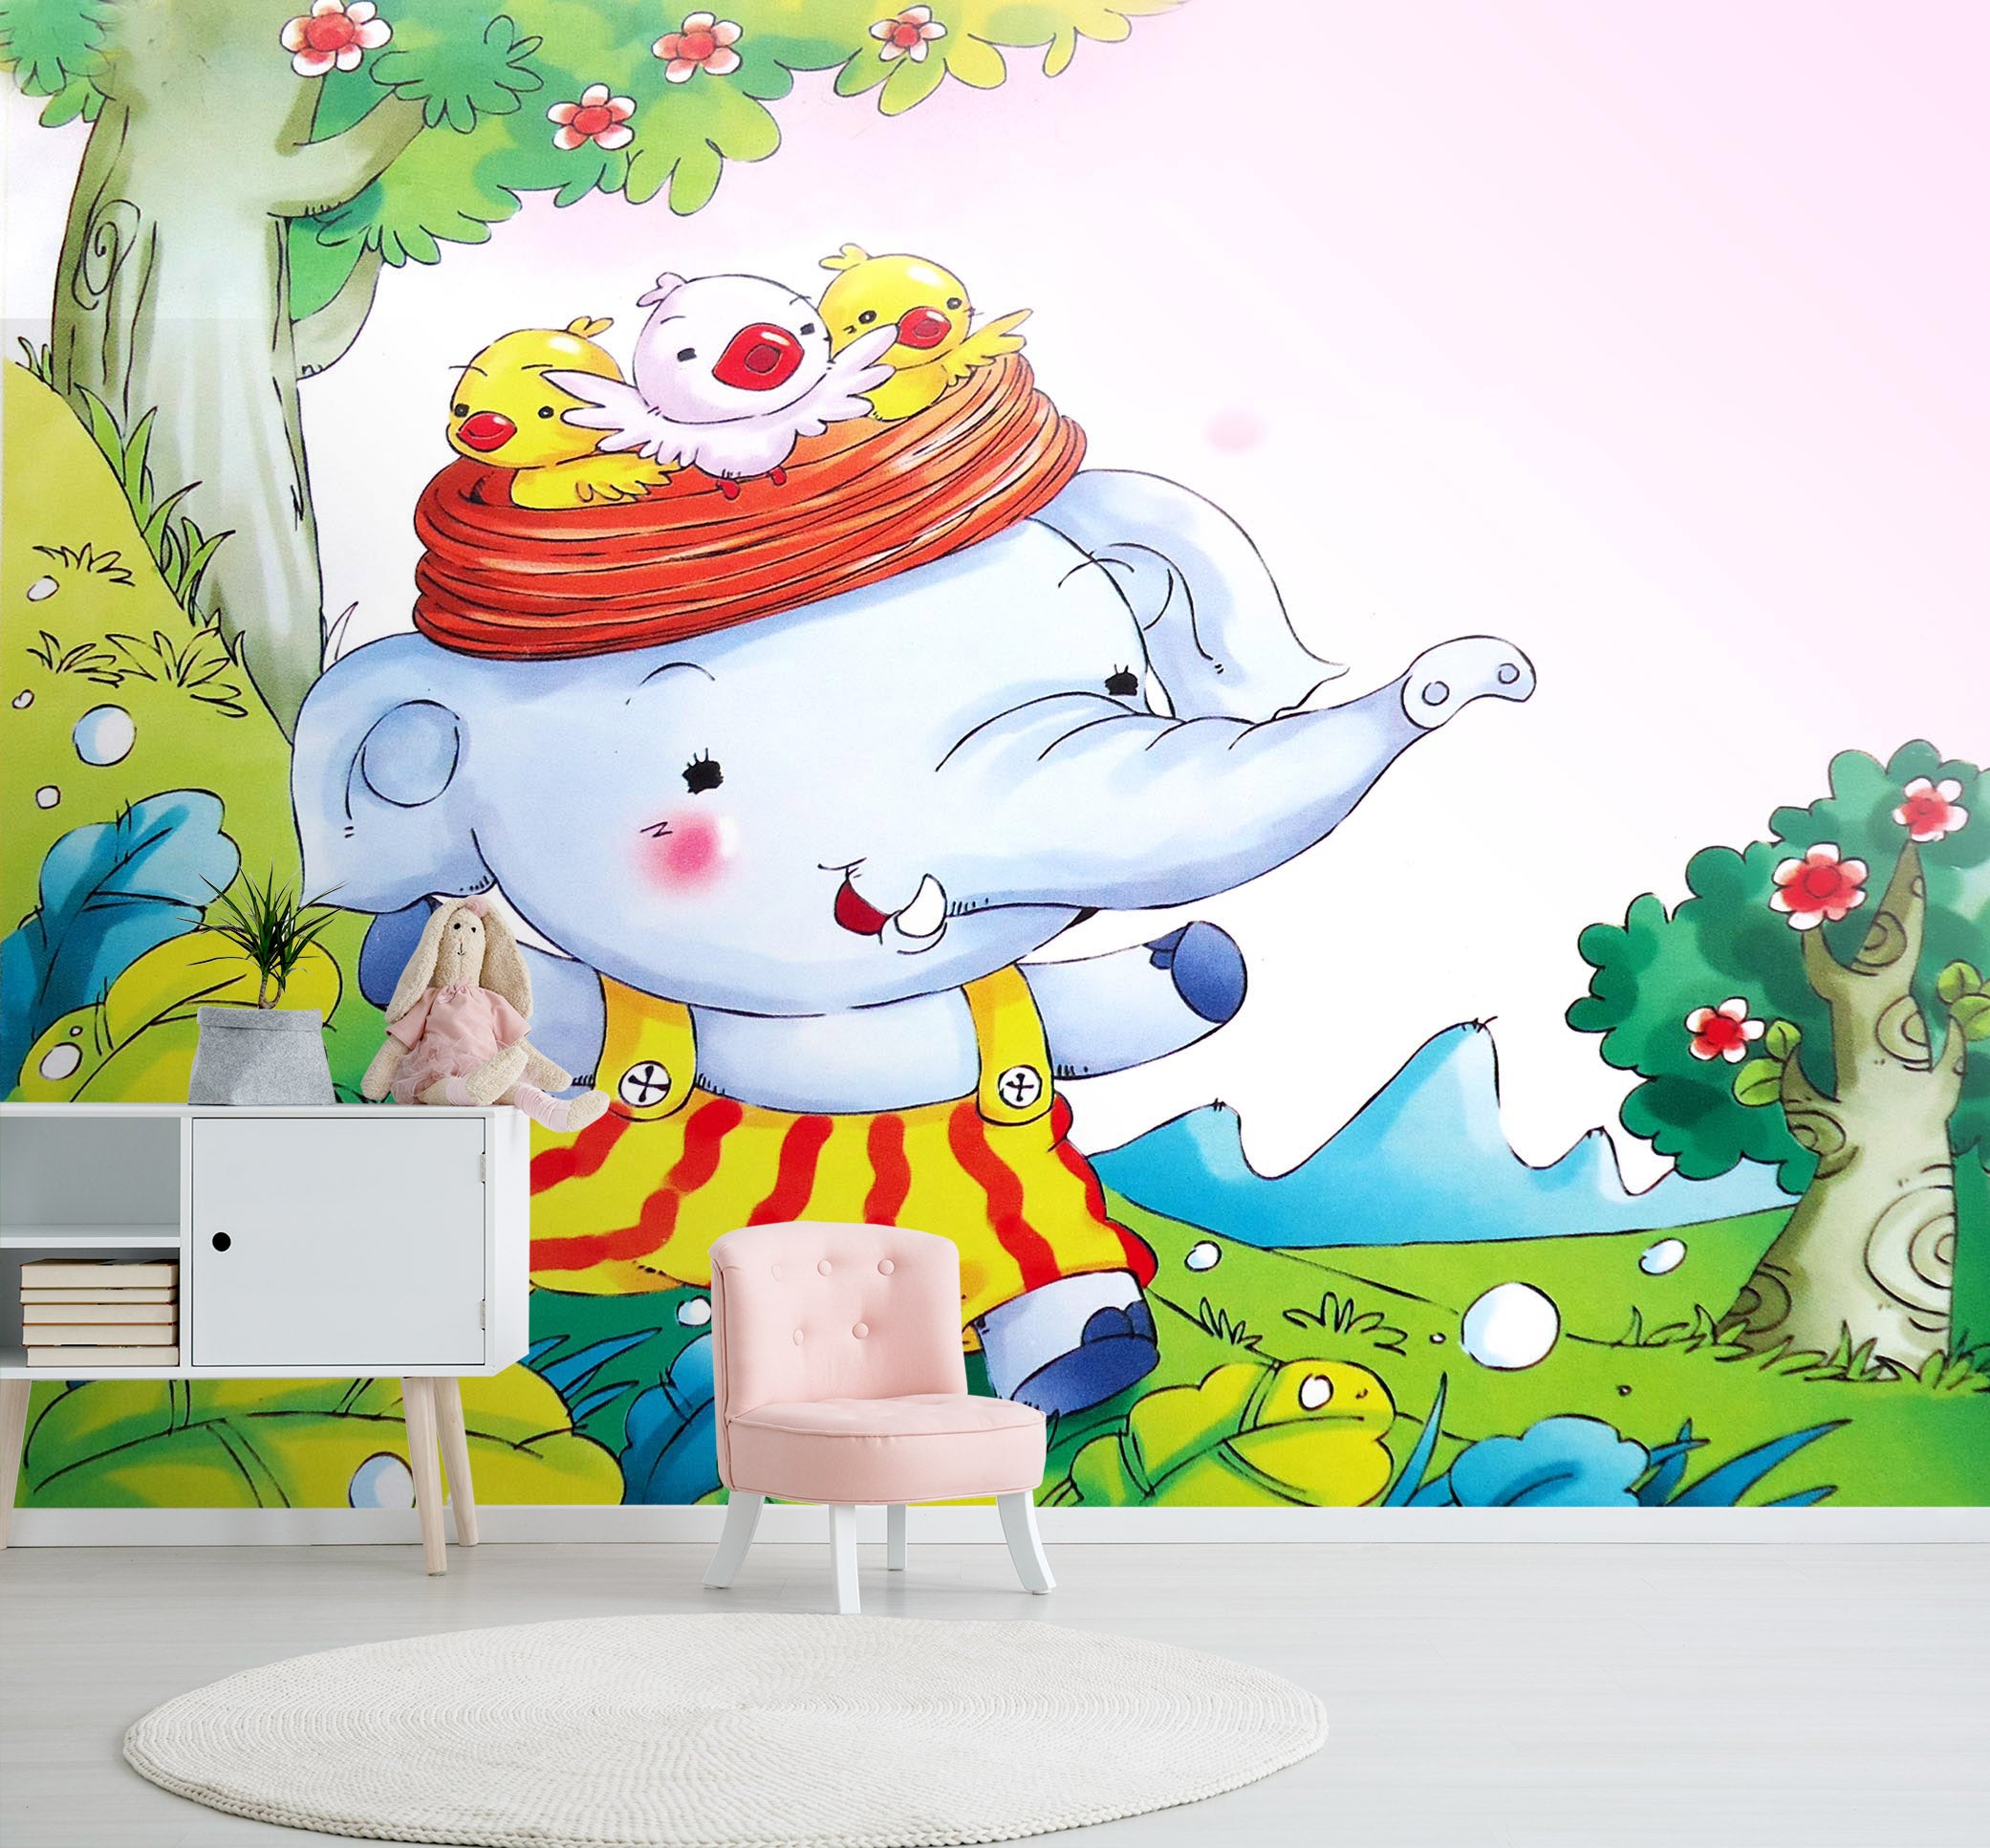 3D Happy Baby Elephant 1664 Wall Murals